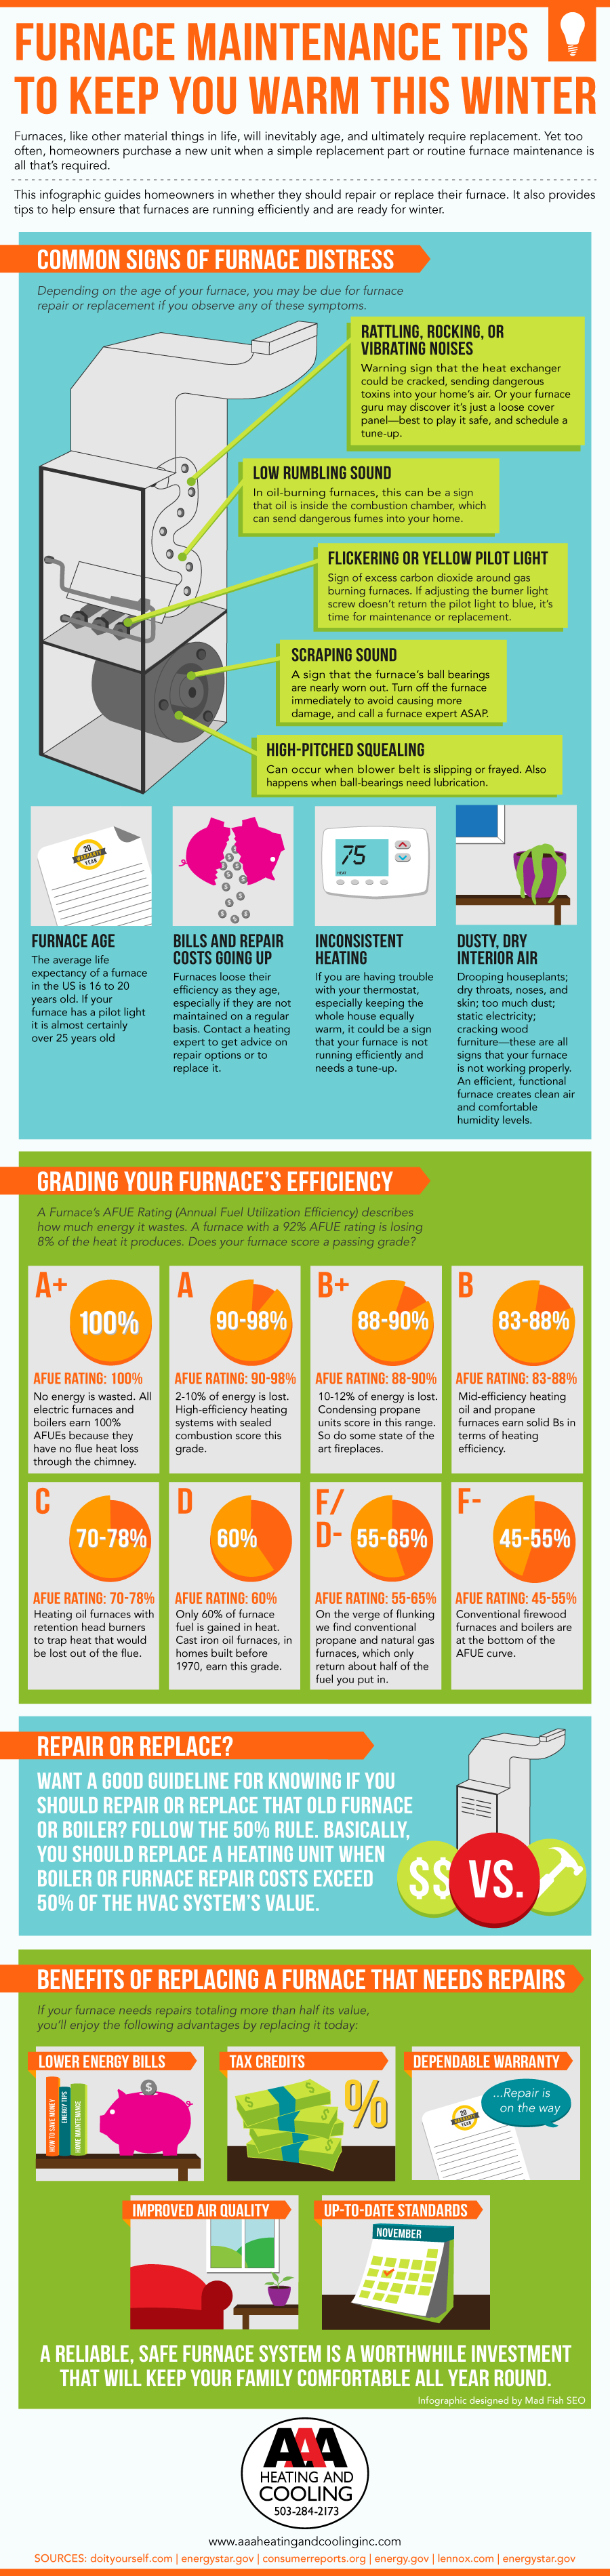 furnace maintenance infographic